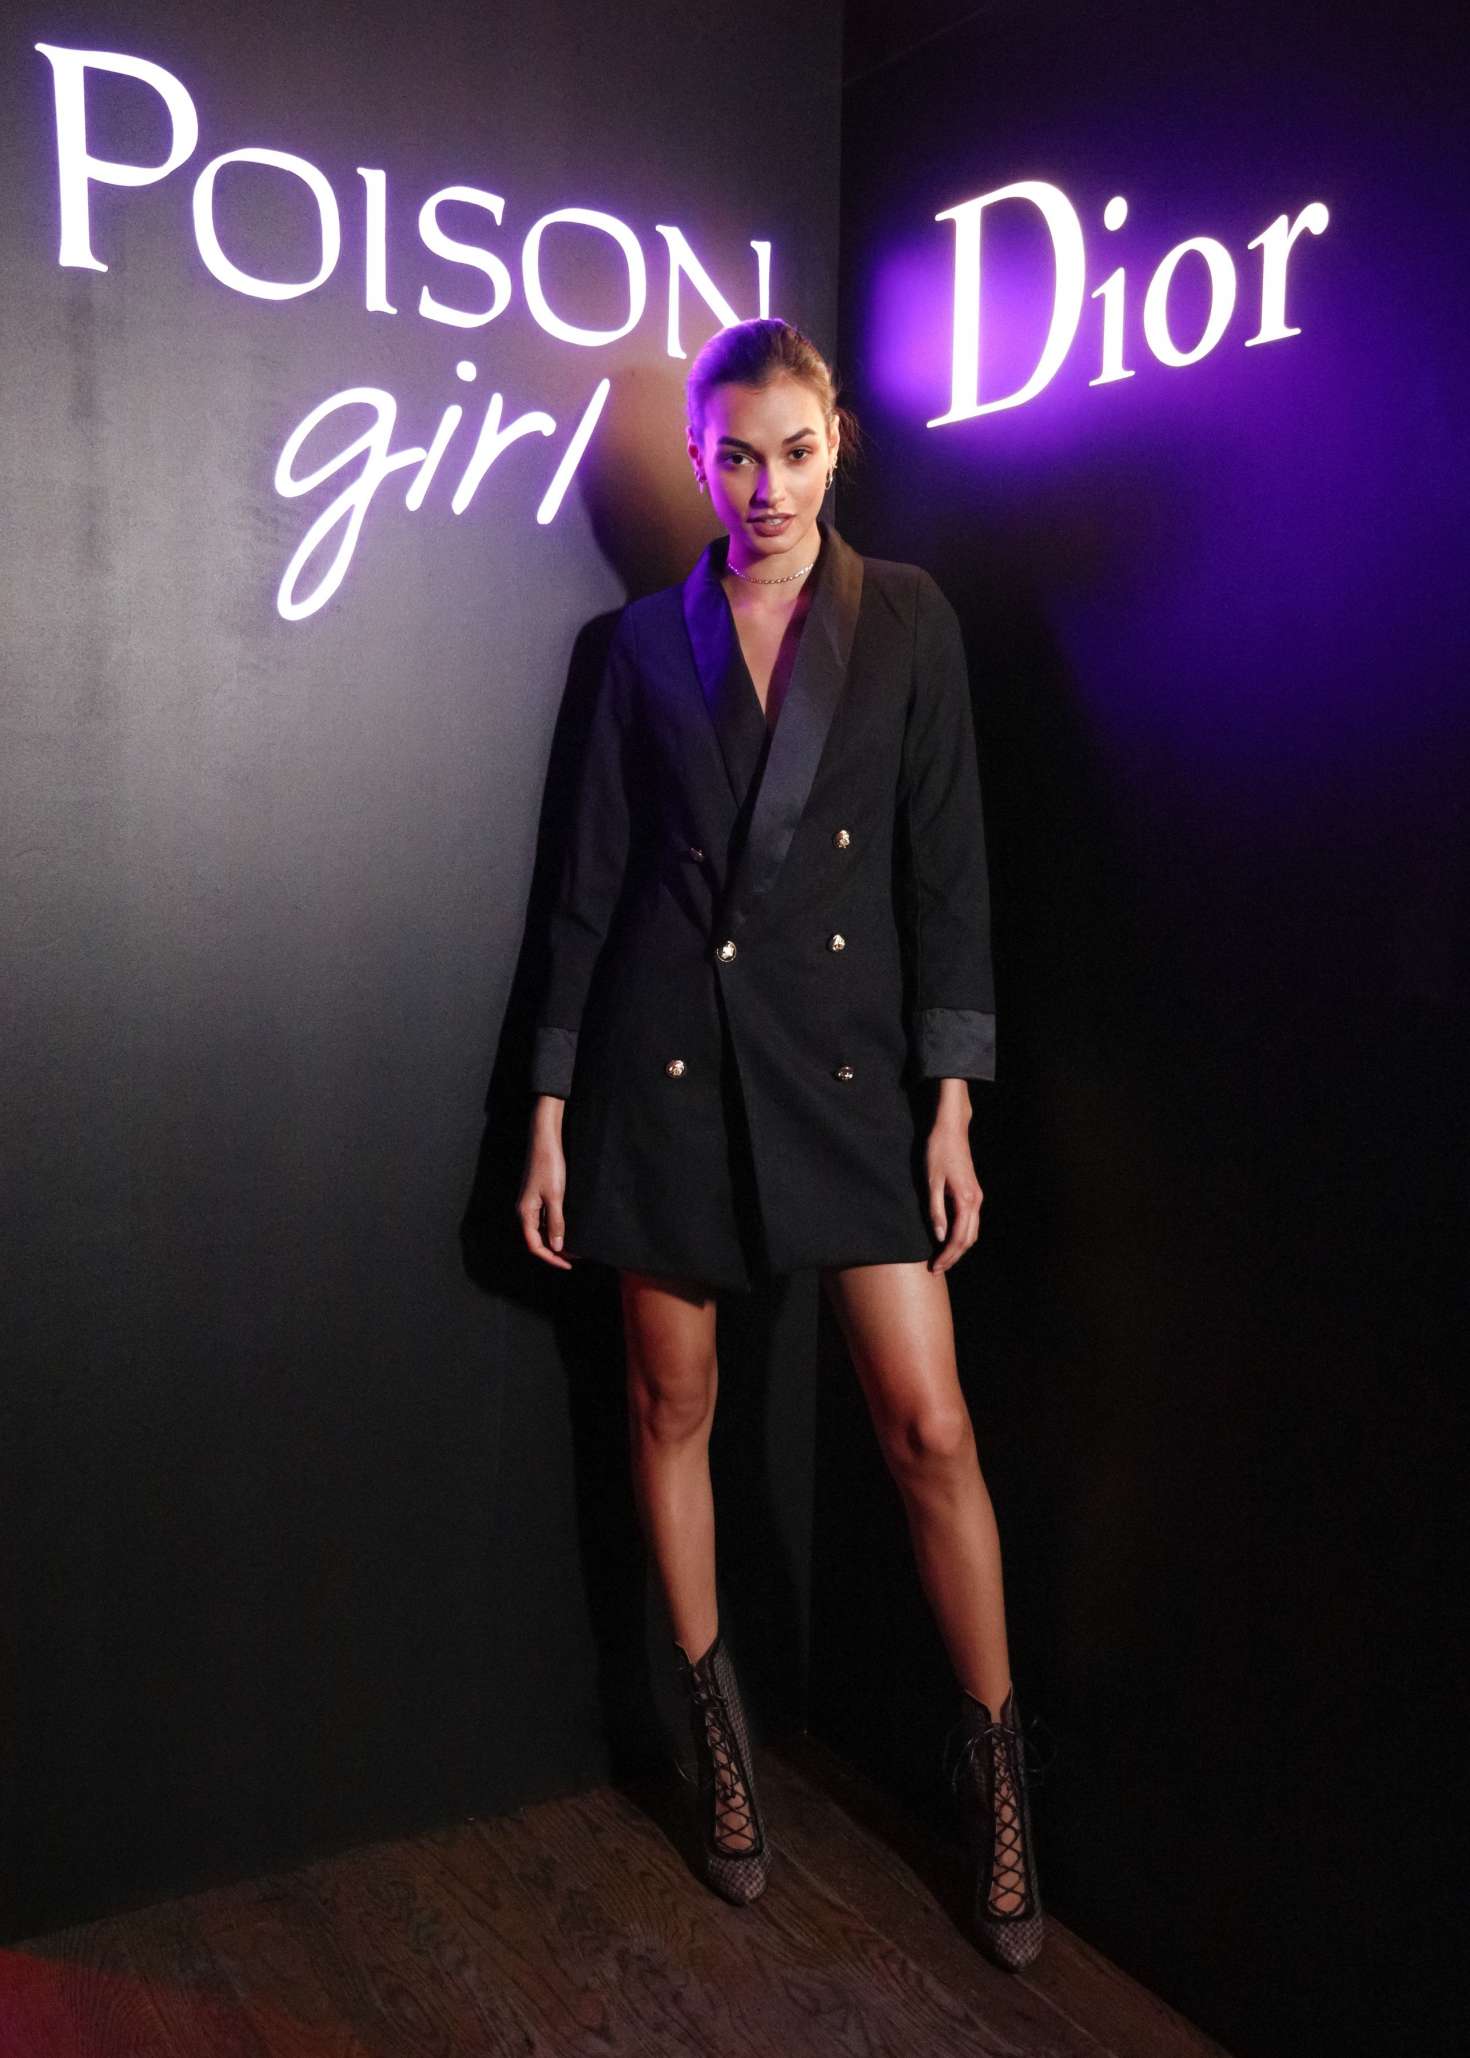 Gizele Oliveira - Dior Celebrates 'Poison Girl' in New York